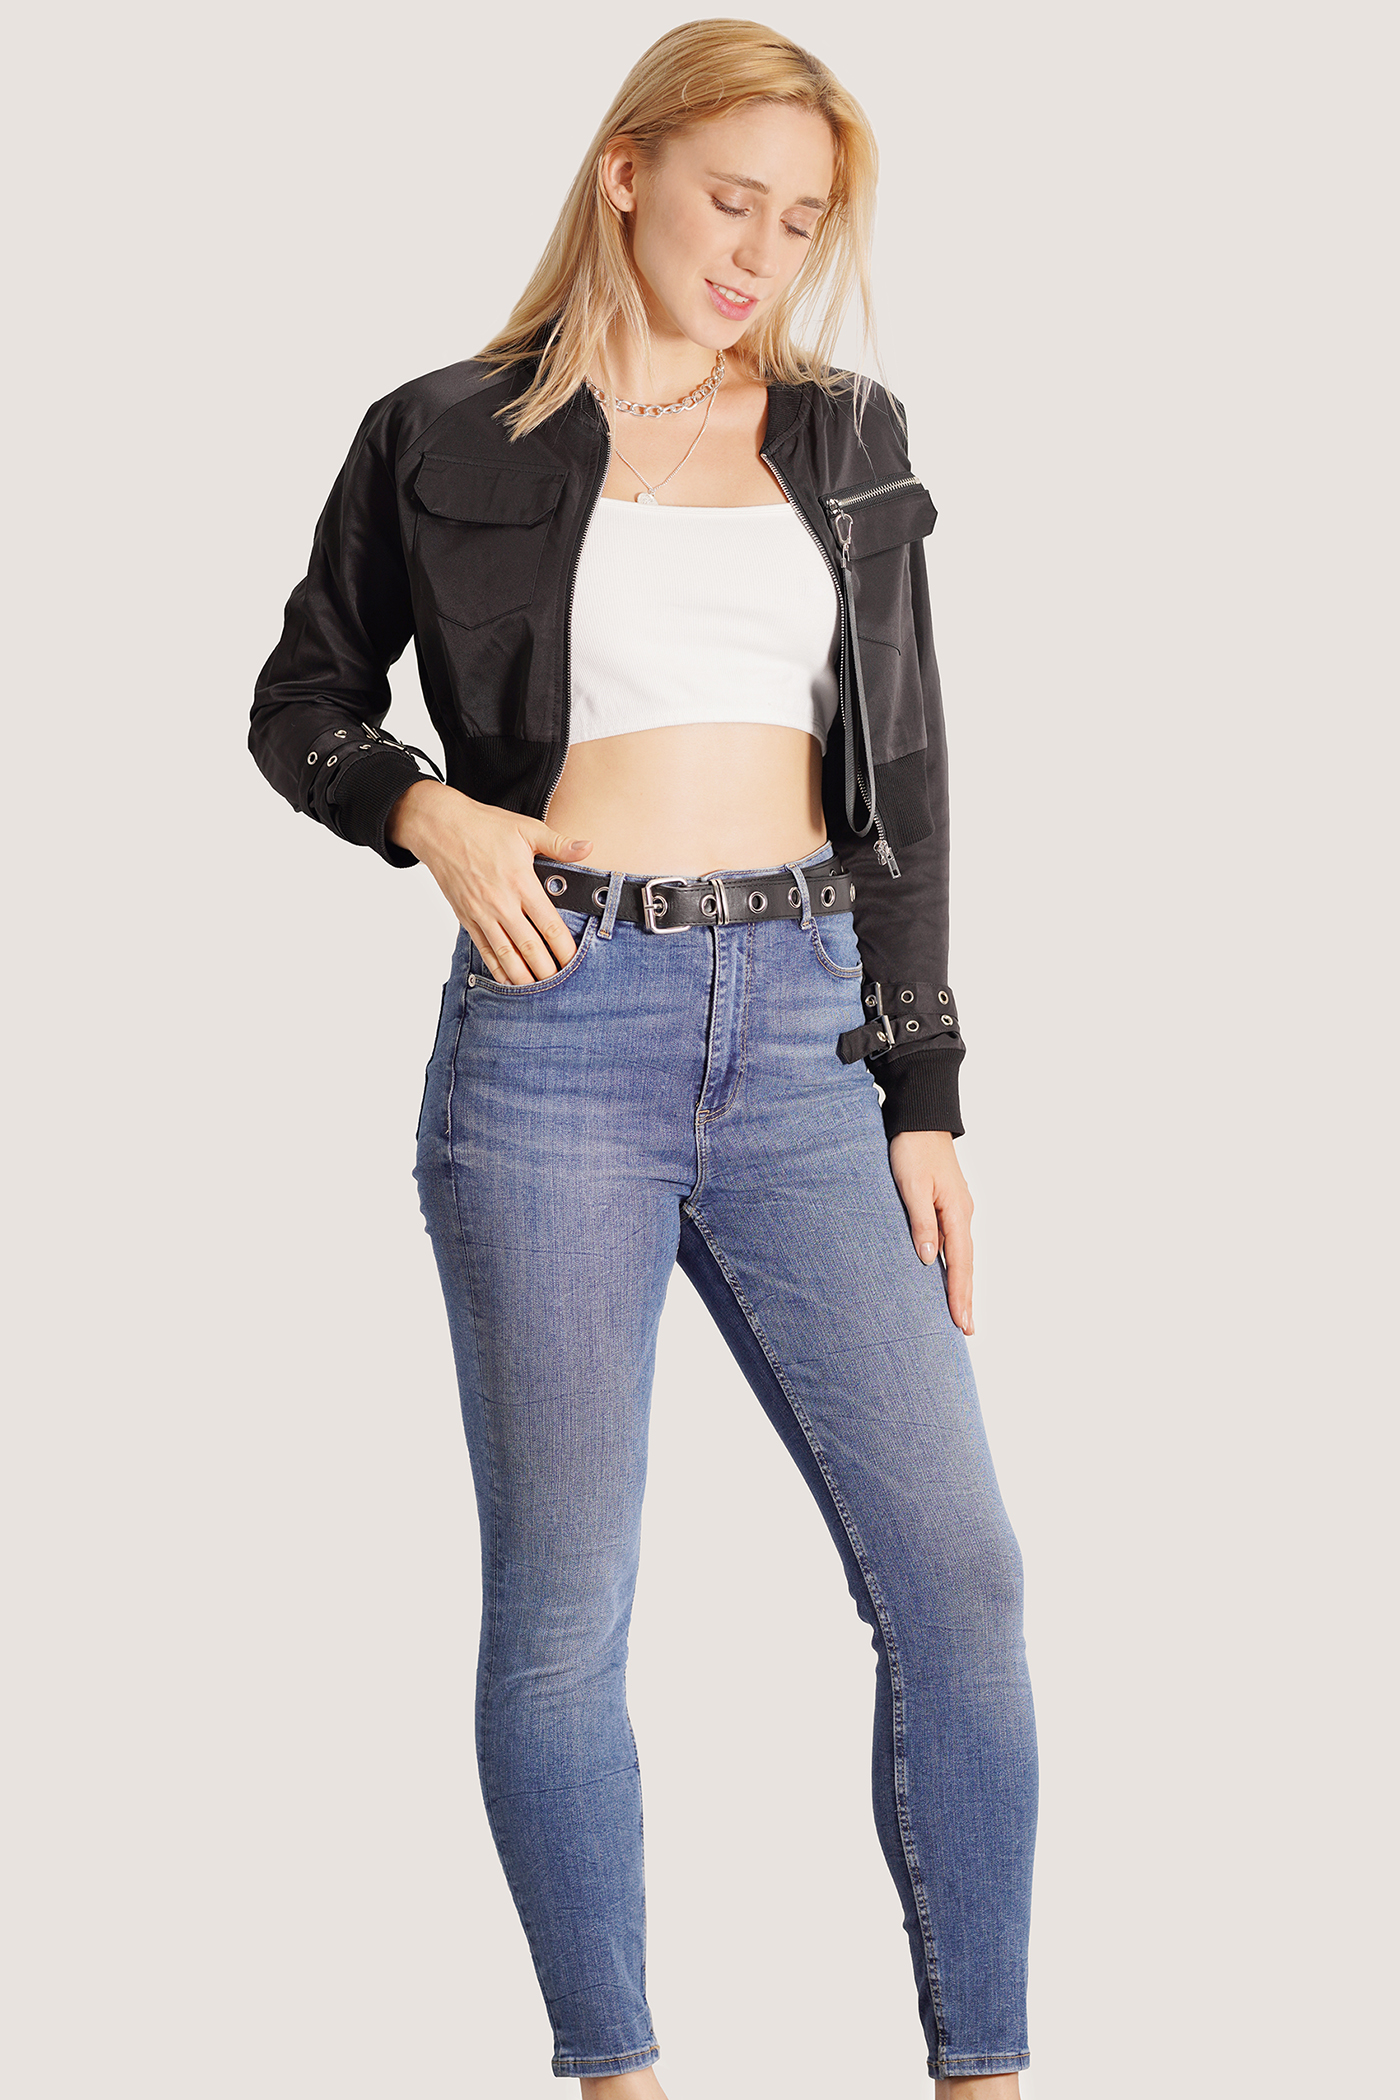 Custom Crop Top Black Jean Jacket For Women